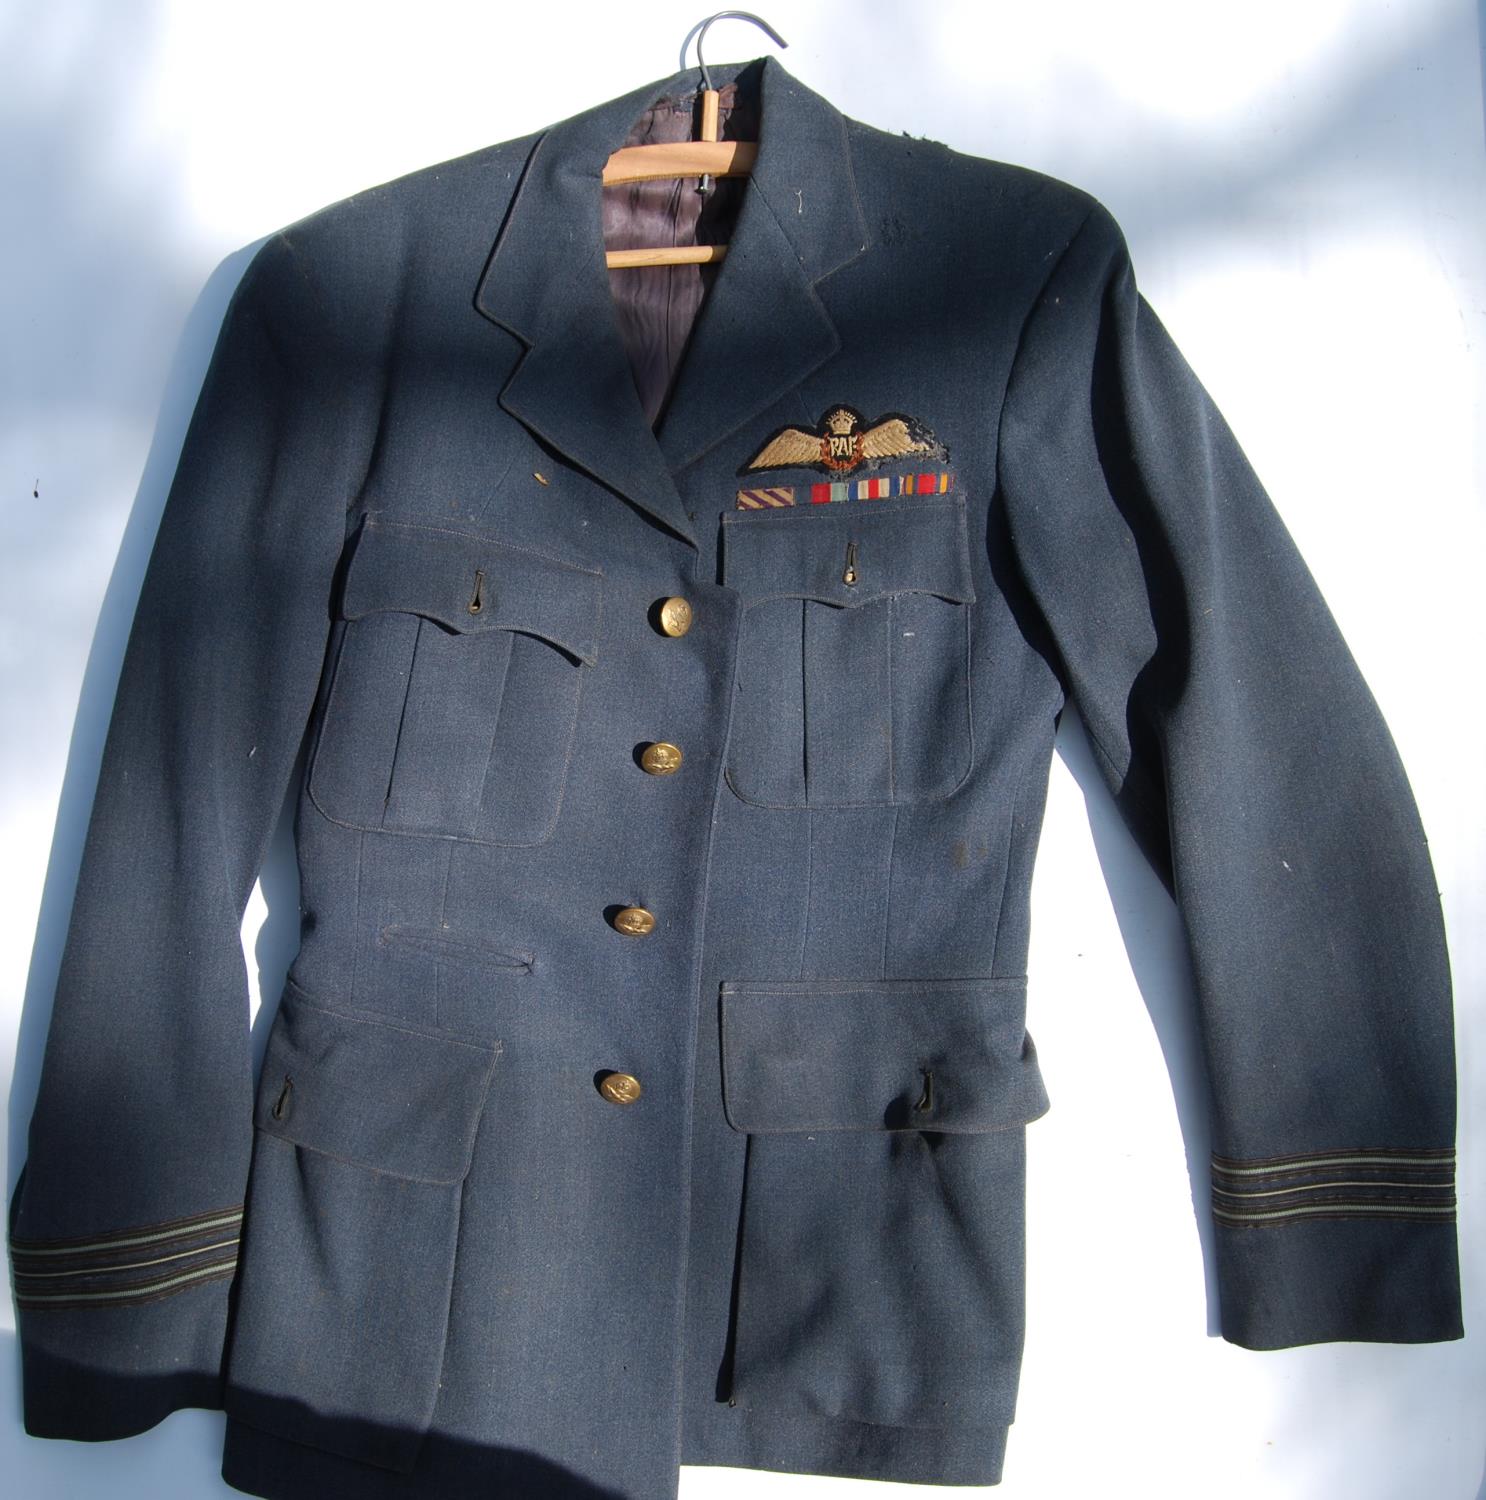 World War II RAF Squadron Leader's jacket for LJ Harries, 061247, ribbons for Distinguished Flying - Image 12 of 22